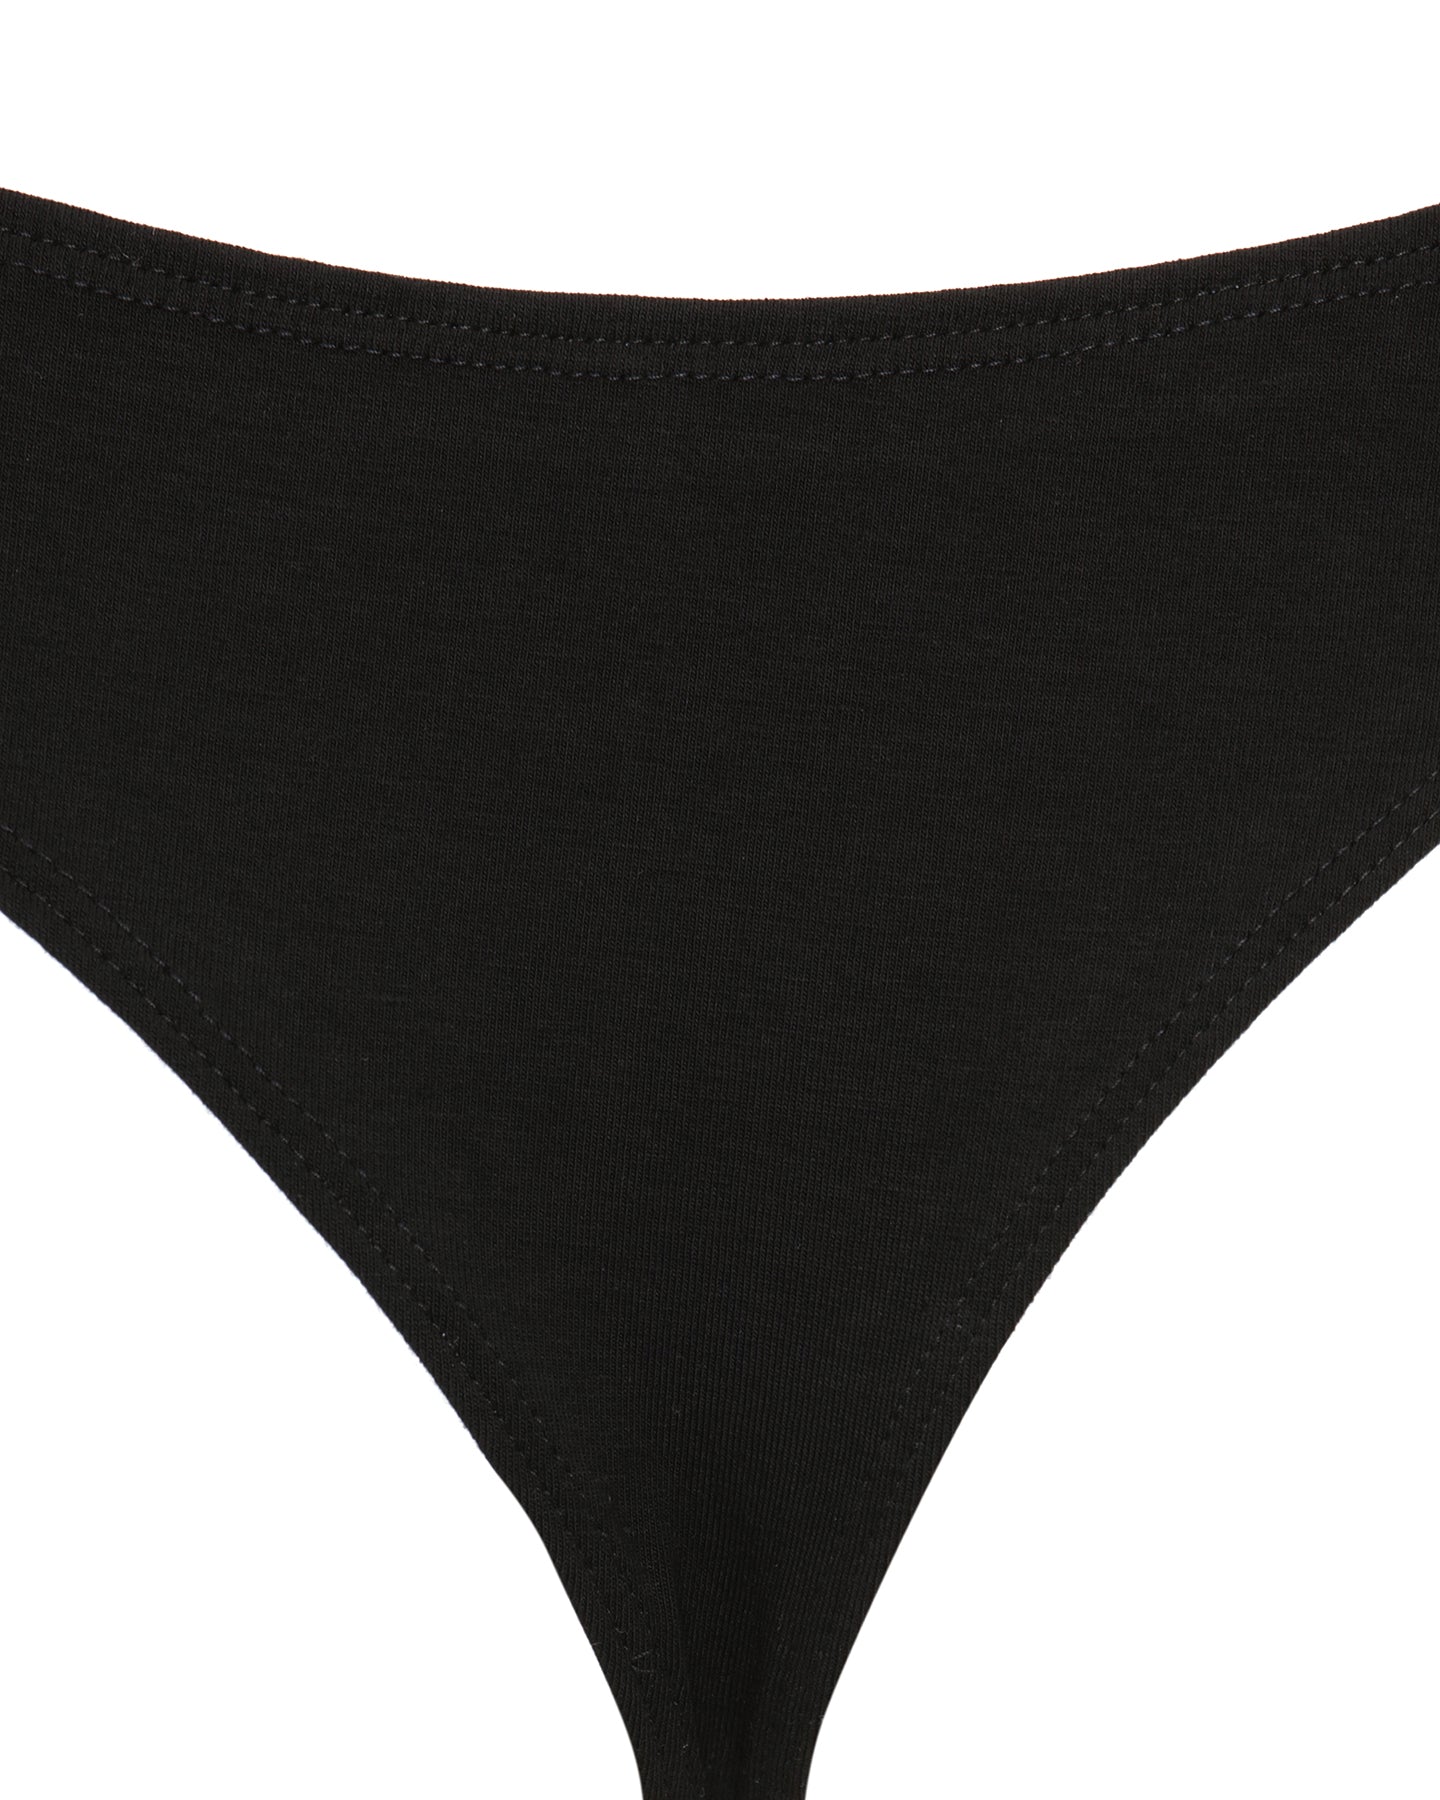 1PCS 100% Organic Black Cotton Comfy Ladies Thong Panties With